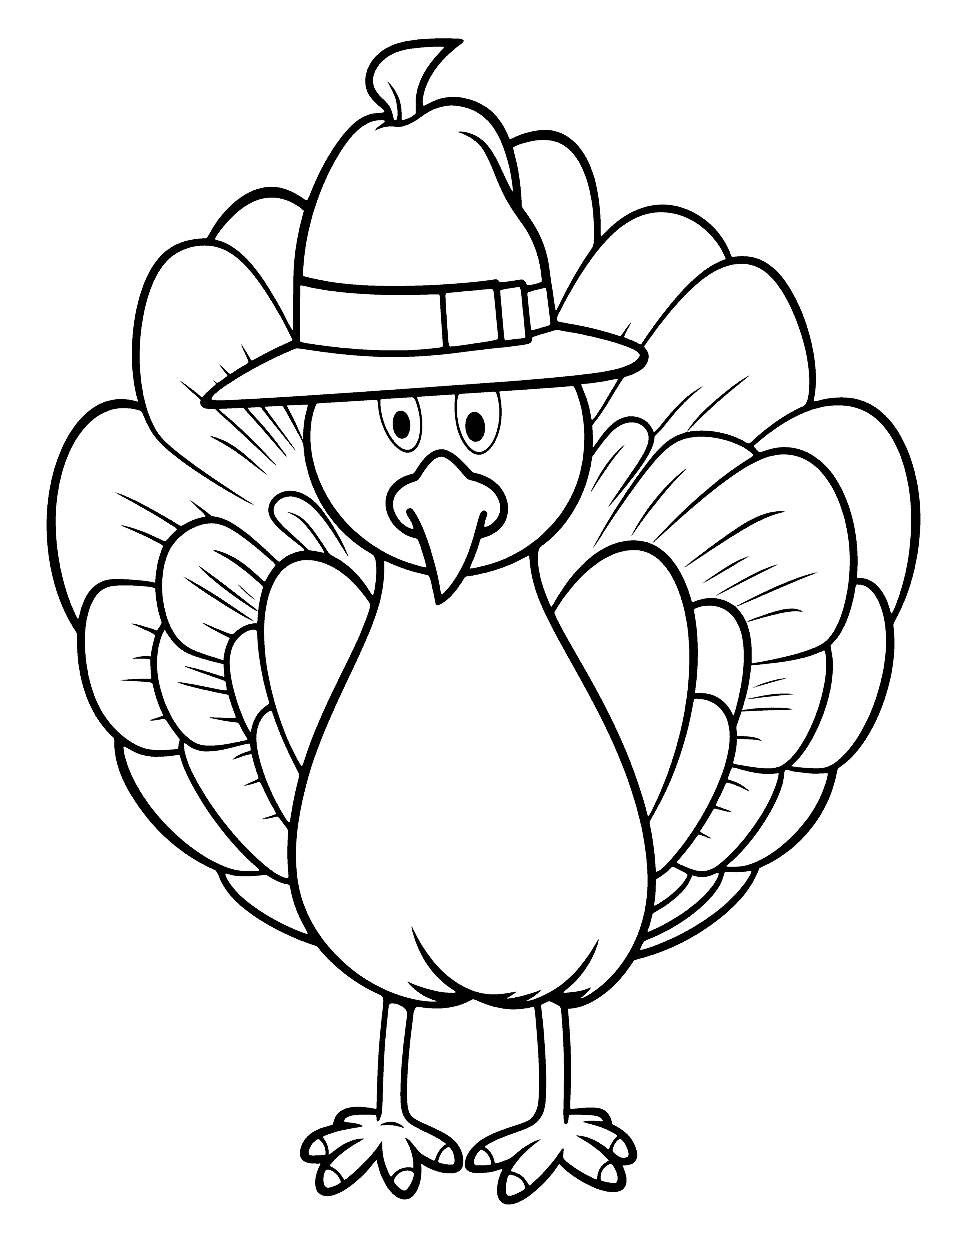 Preschool Thanksgiving Turkey Coloring Page - A friendly turkey wearing a pilgrim hat, perfect for a preschool Thanksgiving project.